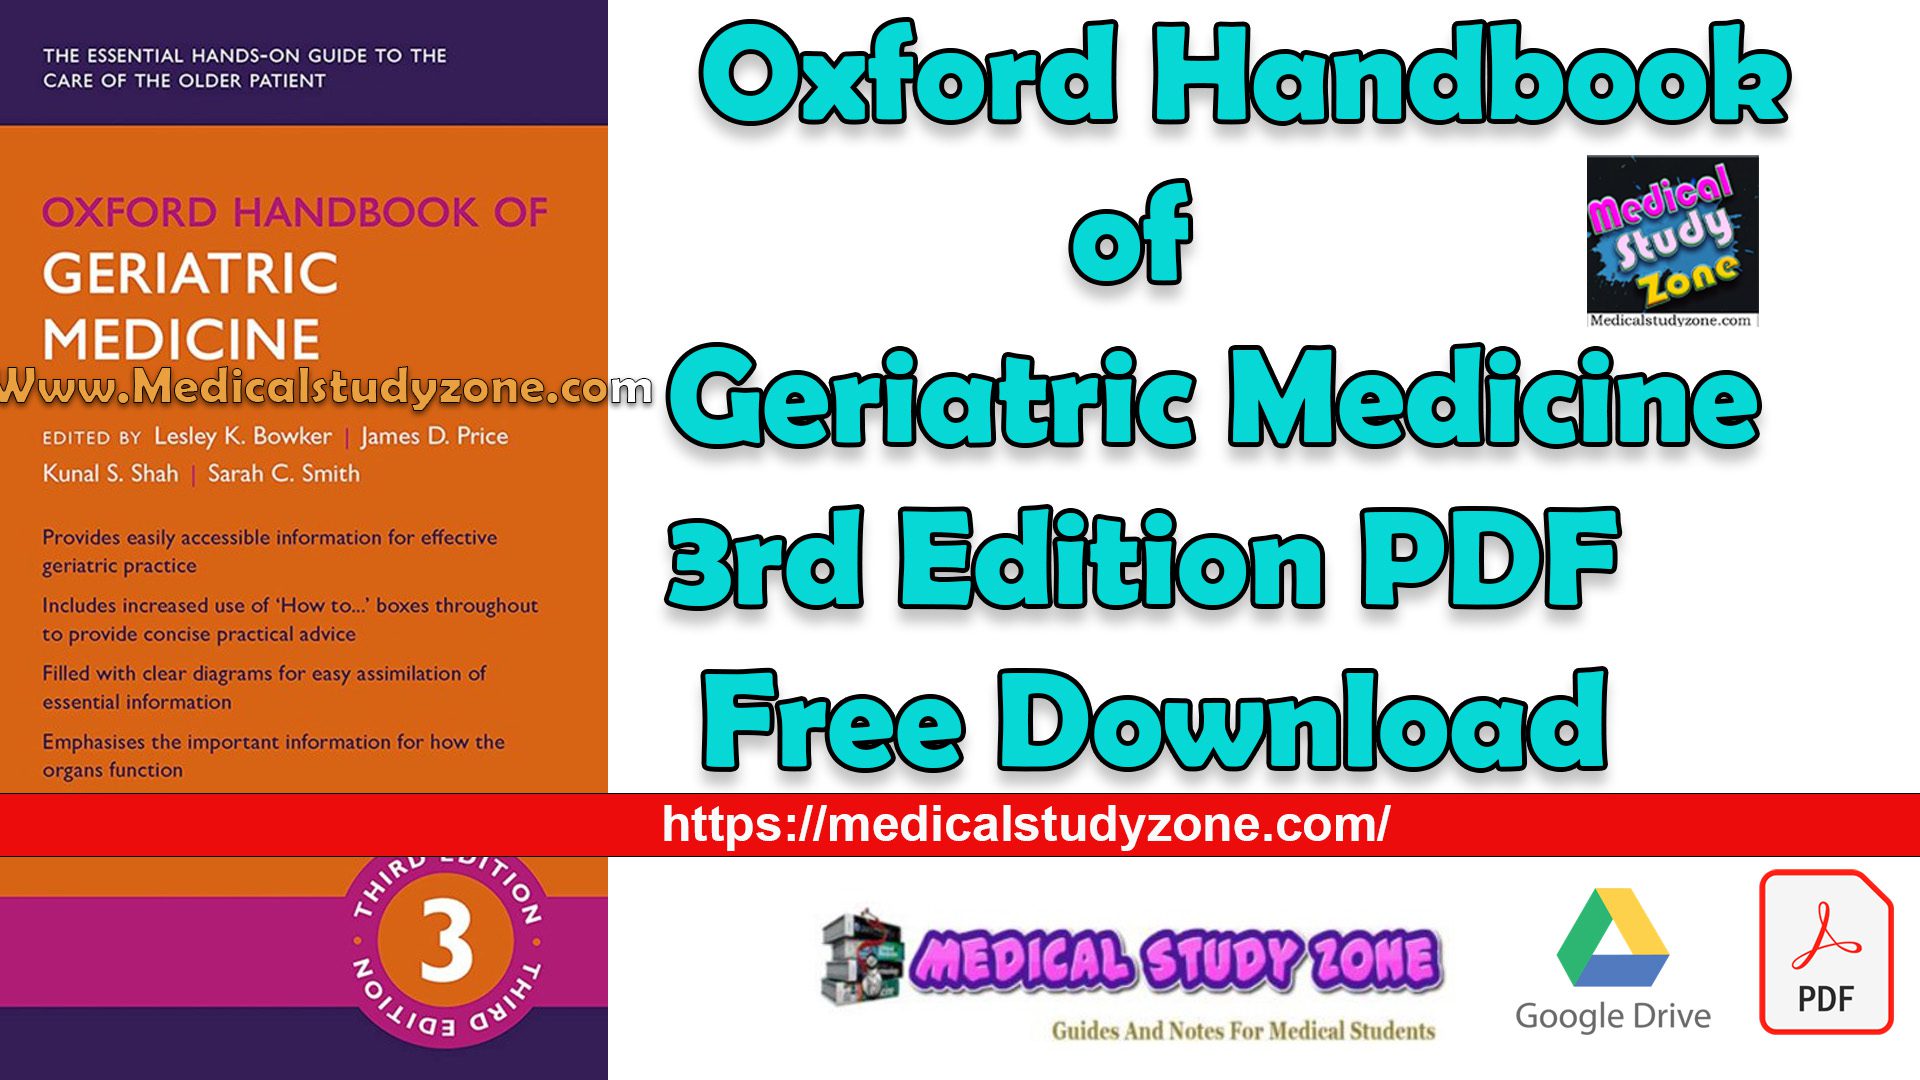 Oxford Handbook of Geriatric Medicine 3rd Edition PDF Free Download